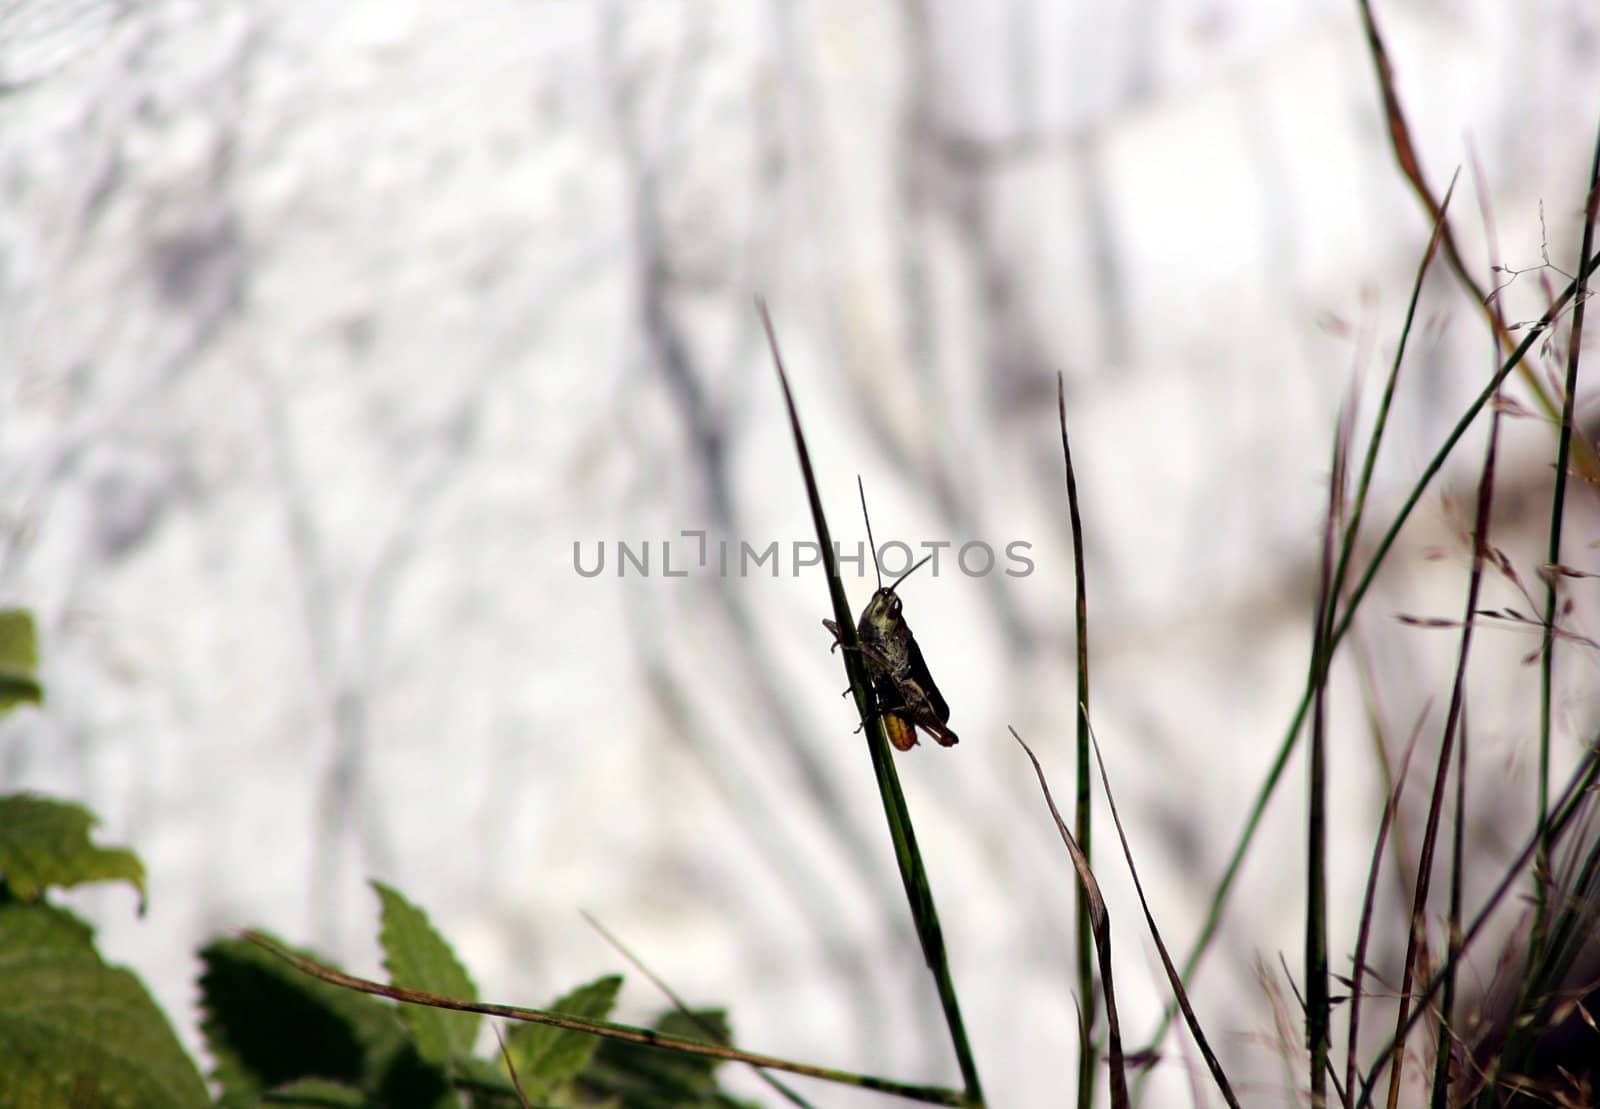 Lone grasshopper sitting high up on grass